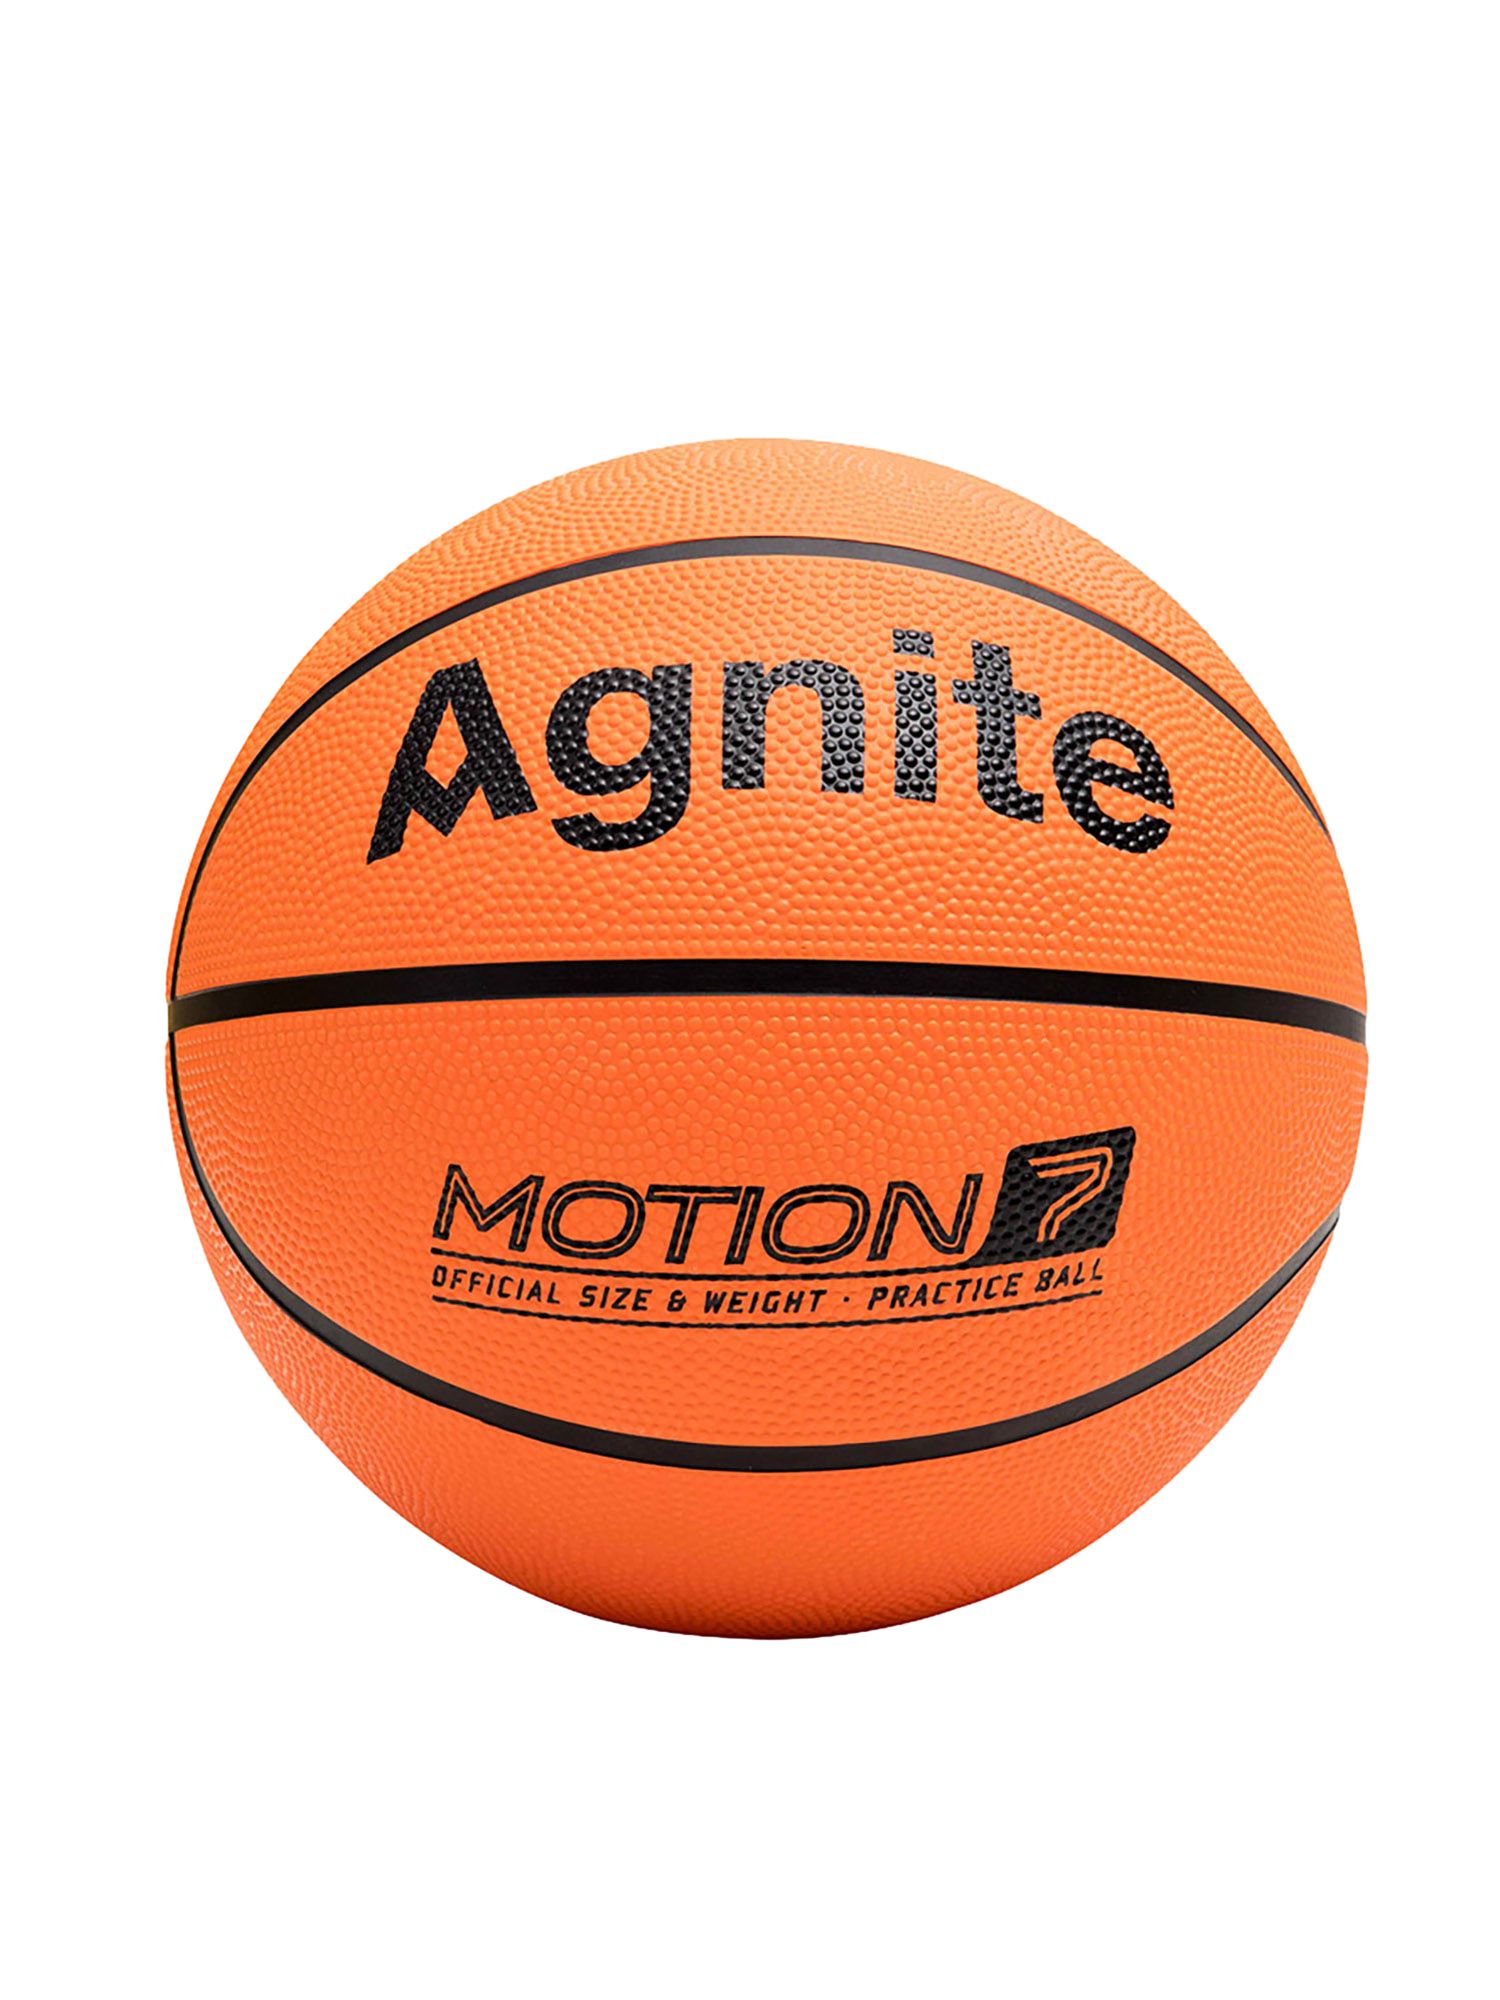 Мяч баскетбольный Agnite Agnite Rubber Basketball (Motion Series) №7 оранжевый